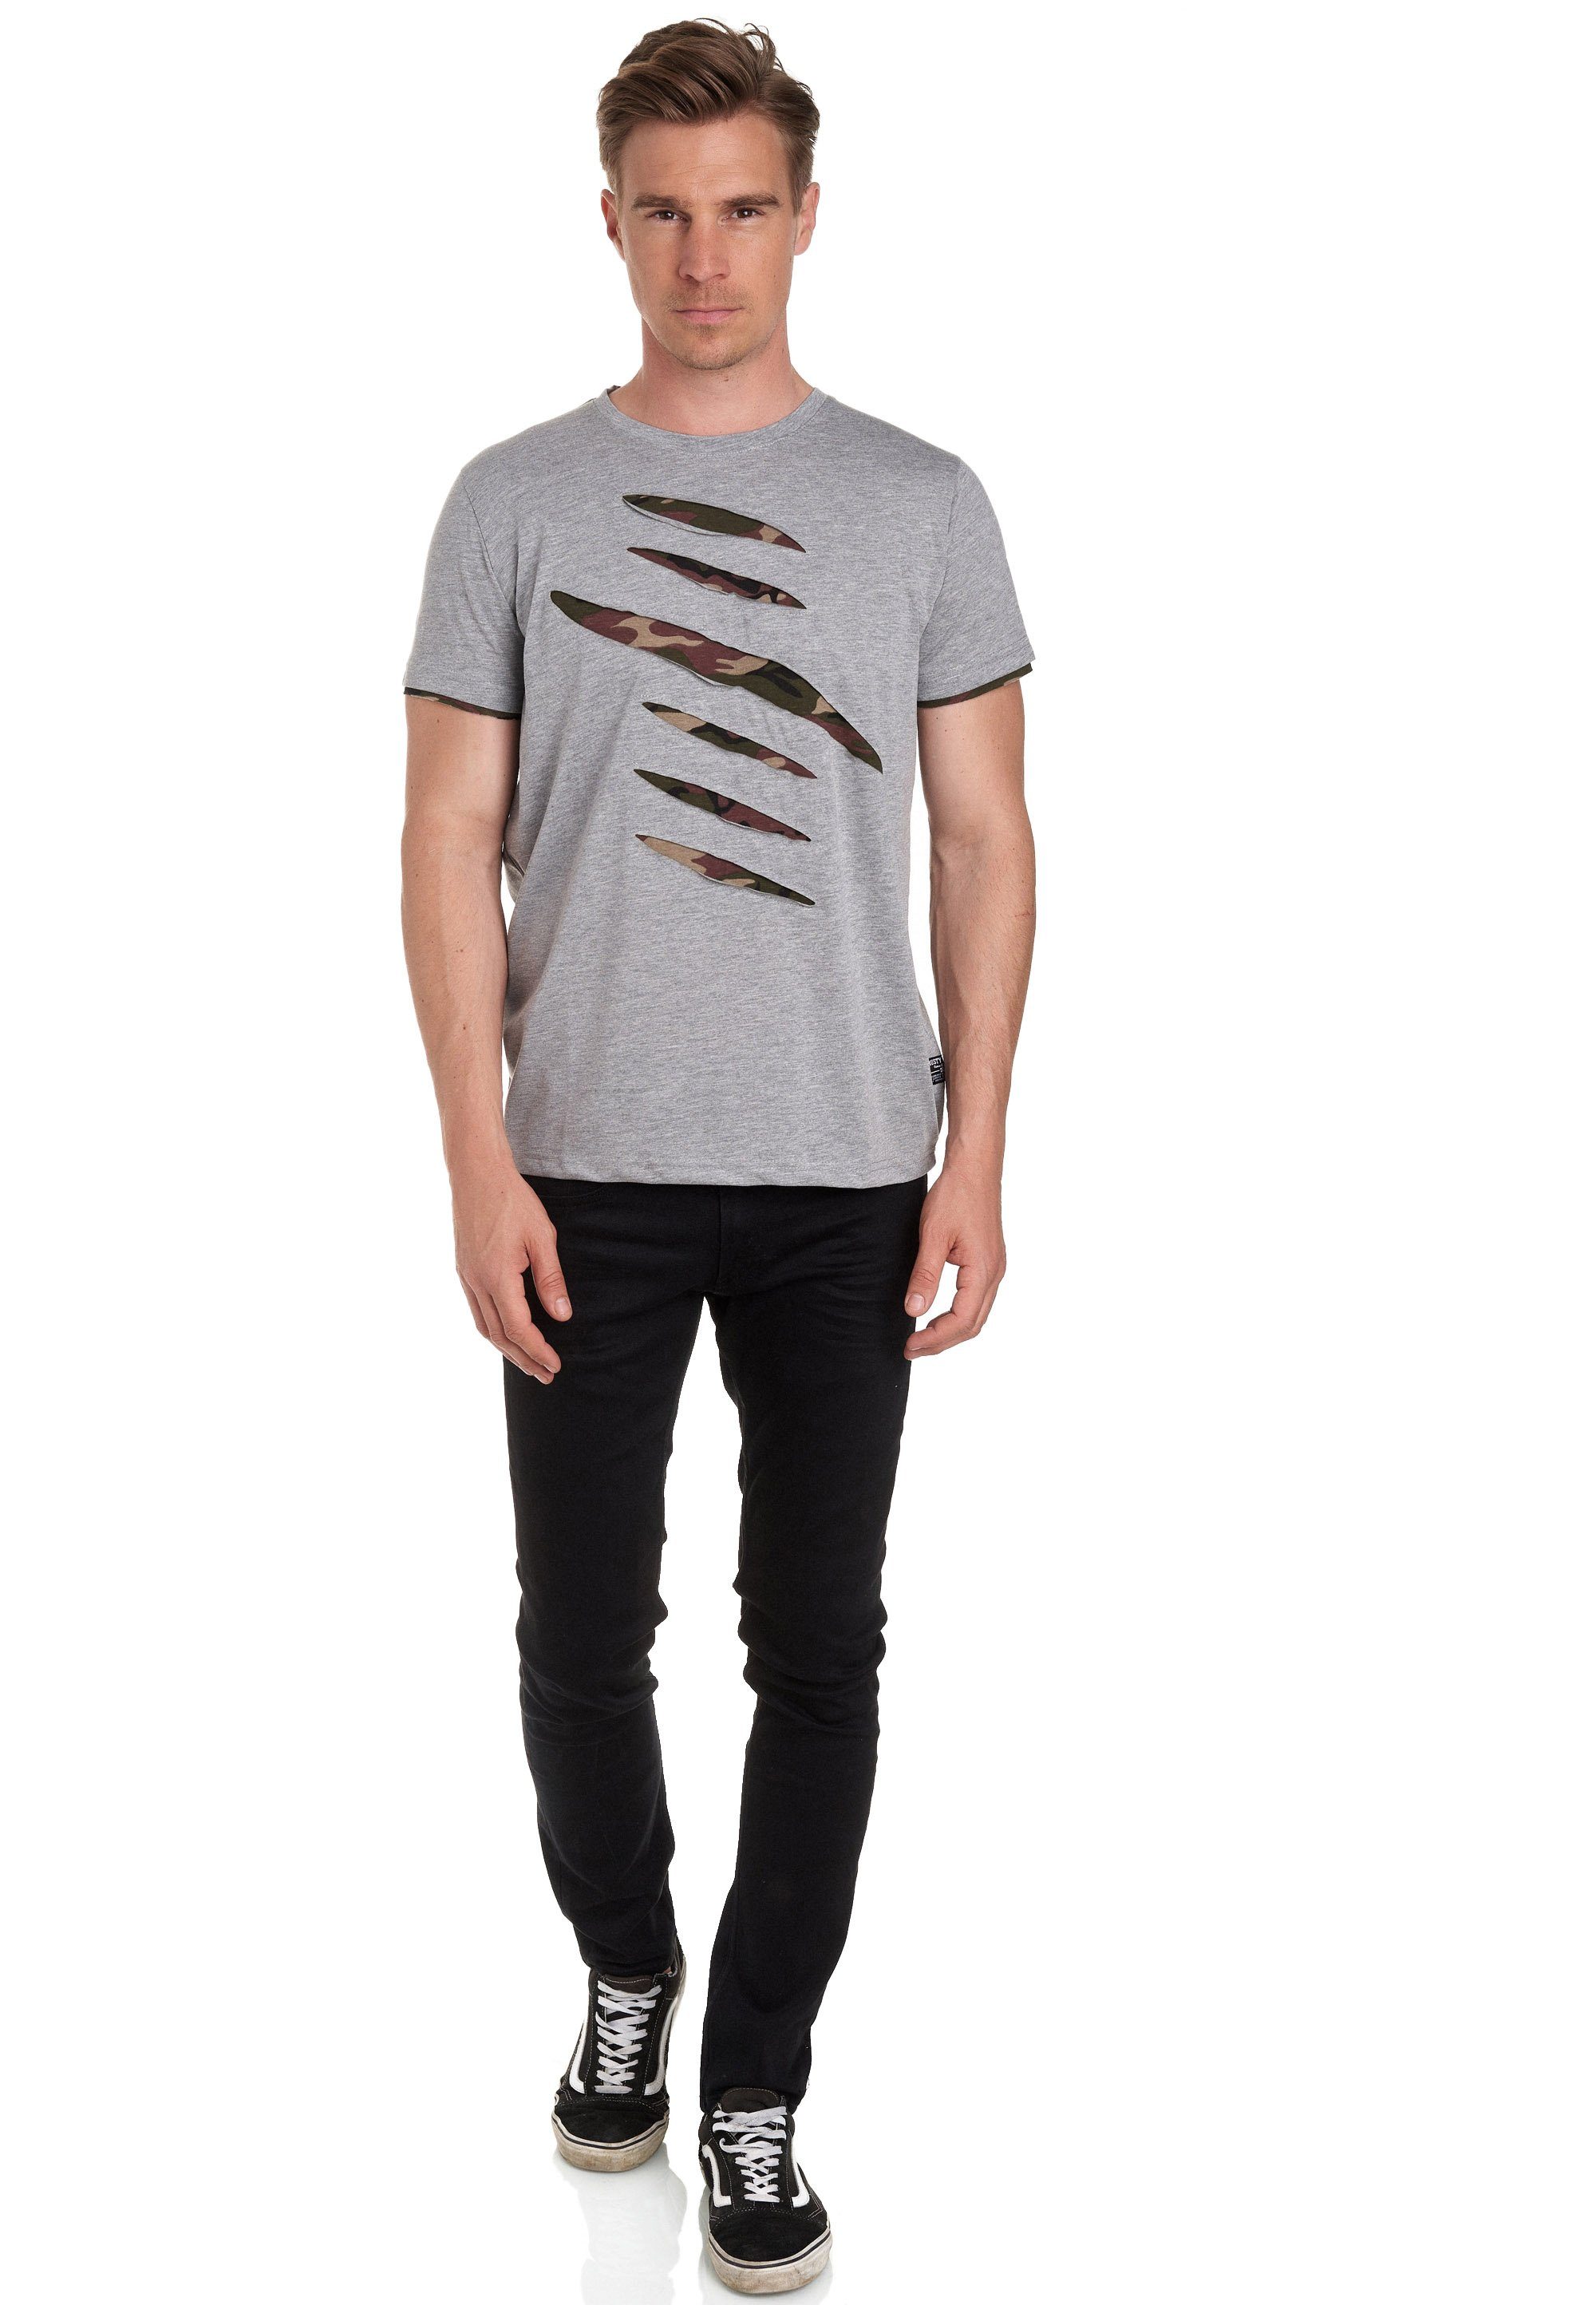 grau Rusty im 2-in-1-Design Neal T-Shirt trendigen